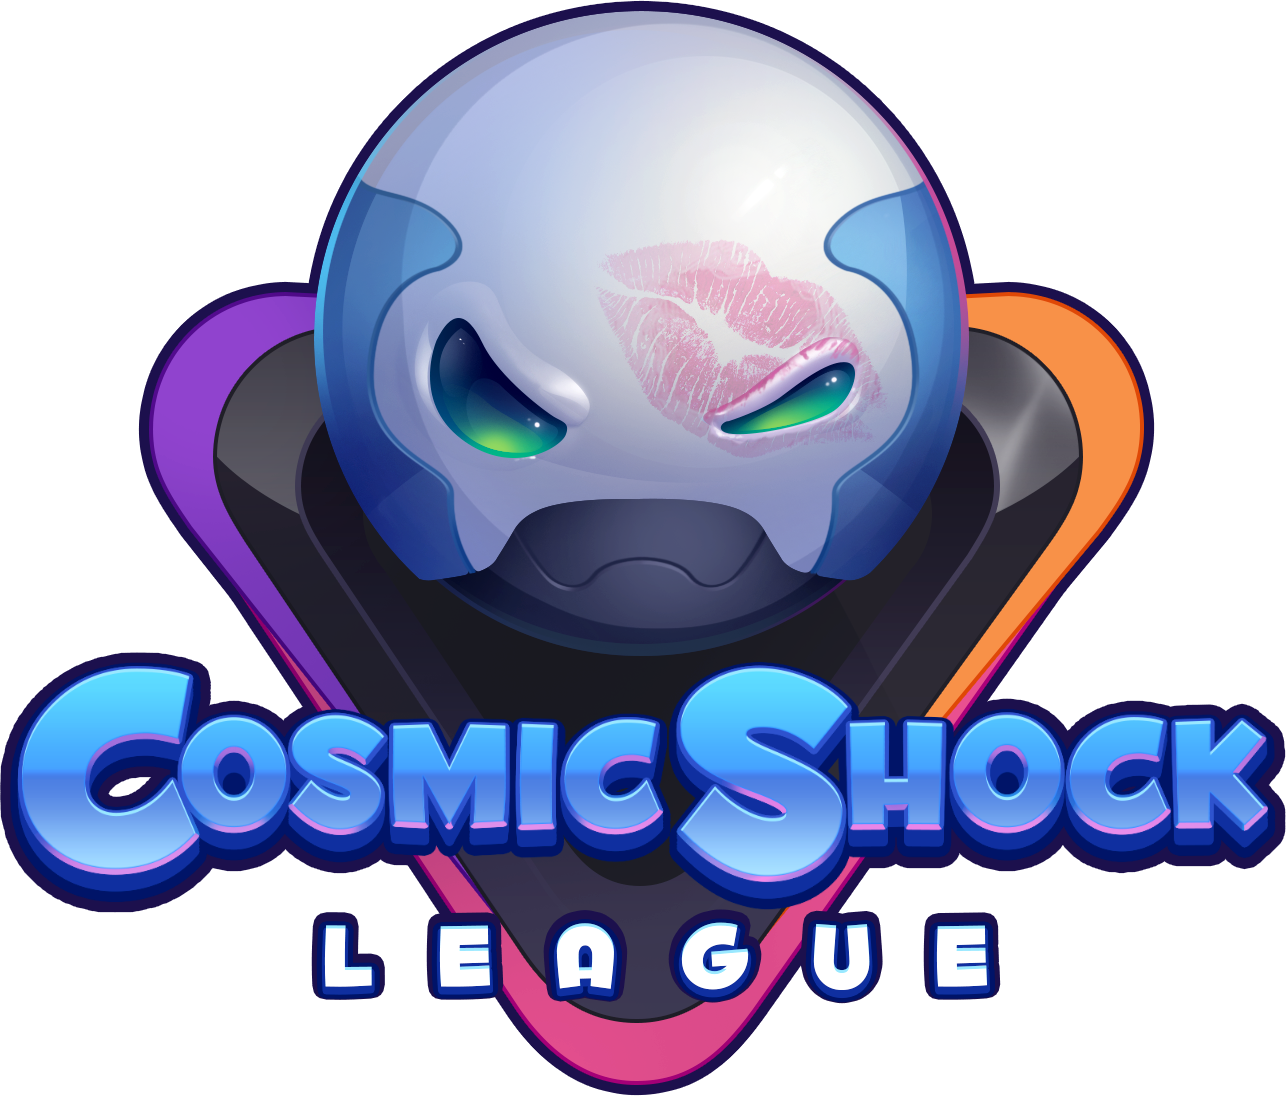 Cosmic shock league